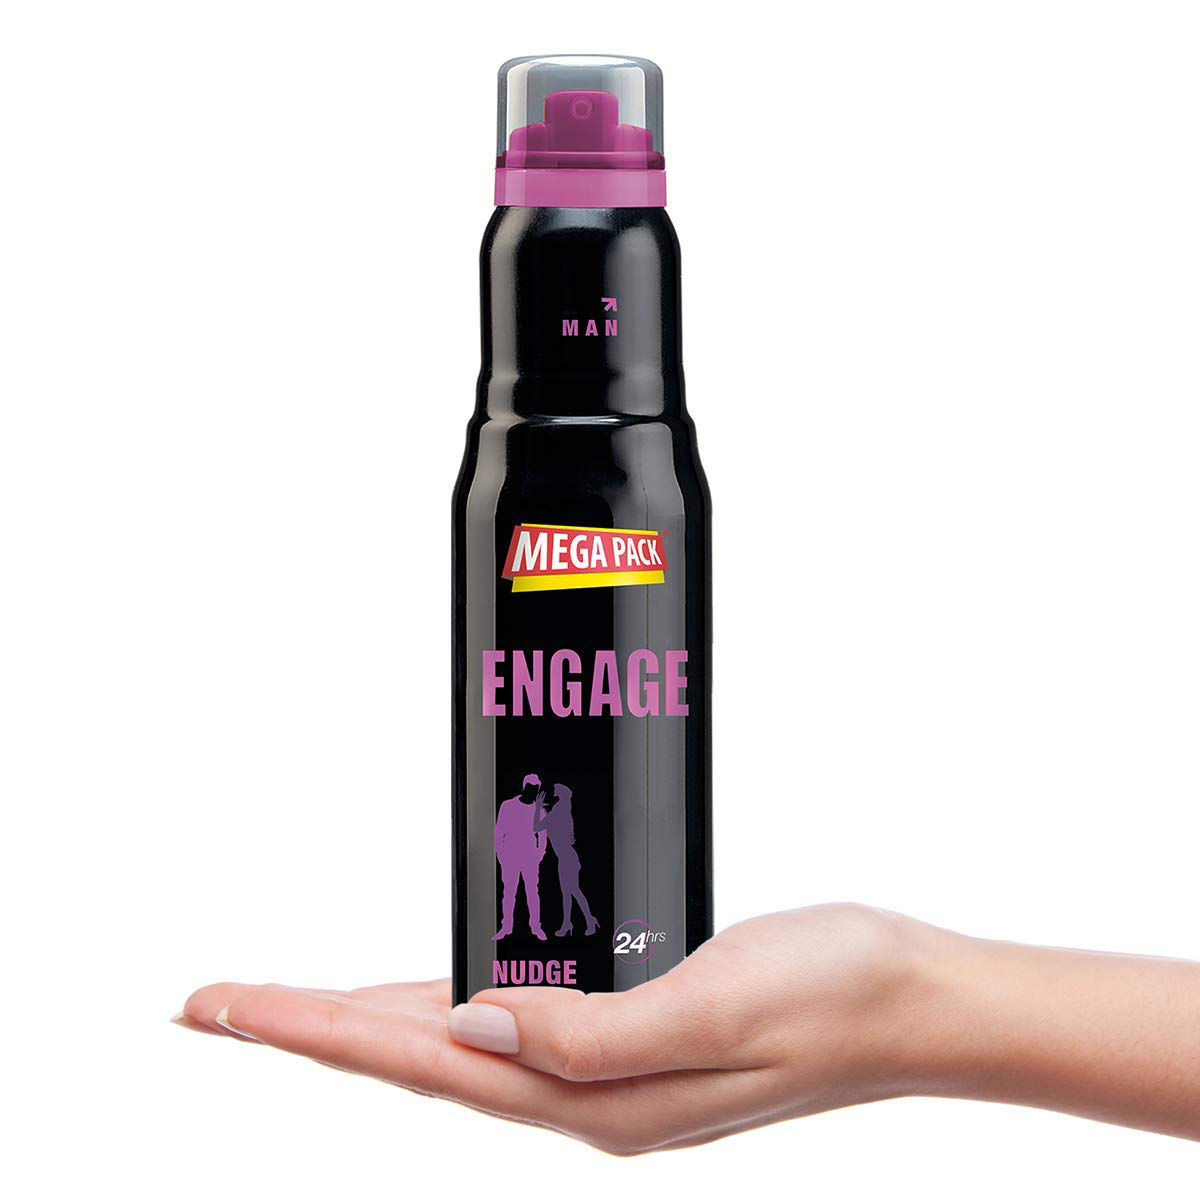 Buy Engage Nudge Deodorant Body Spray For Men, 220 ml Online